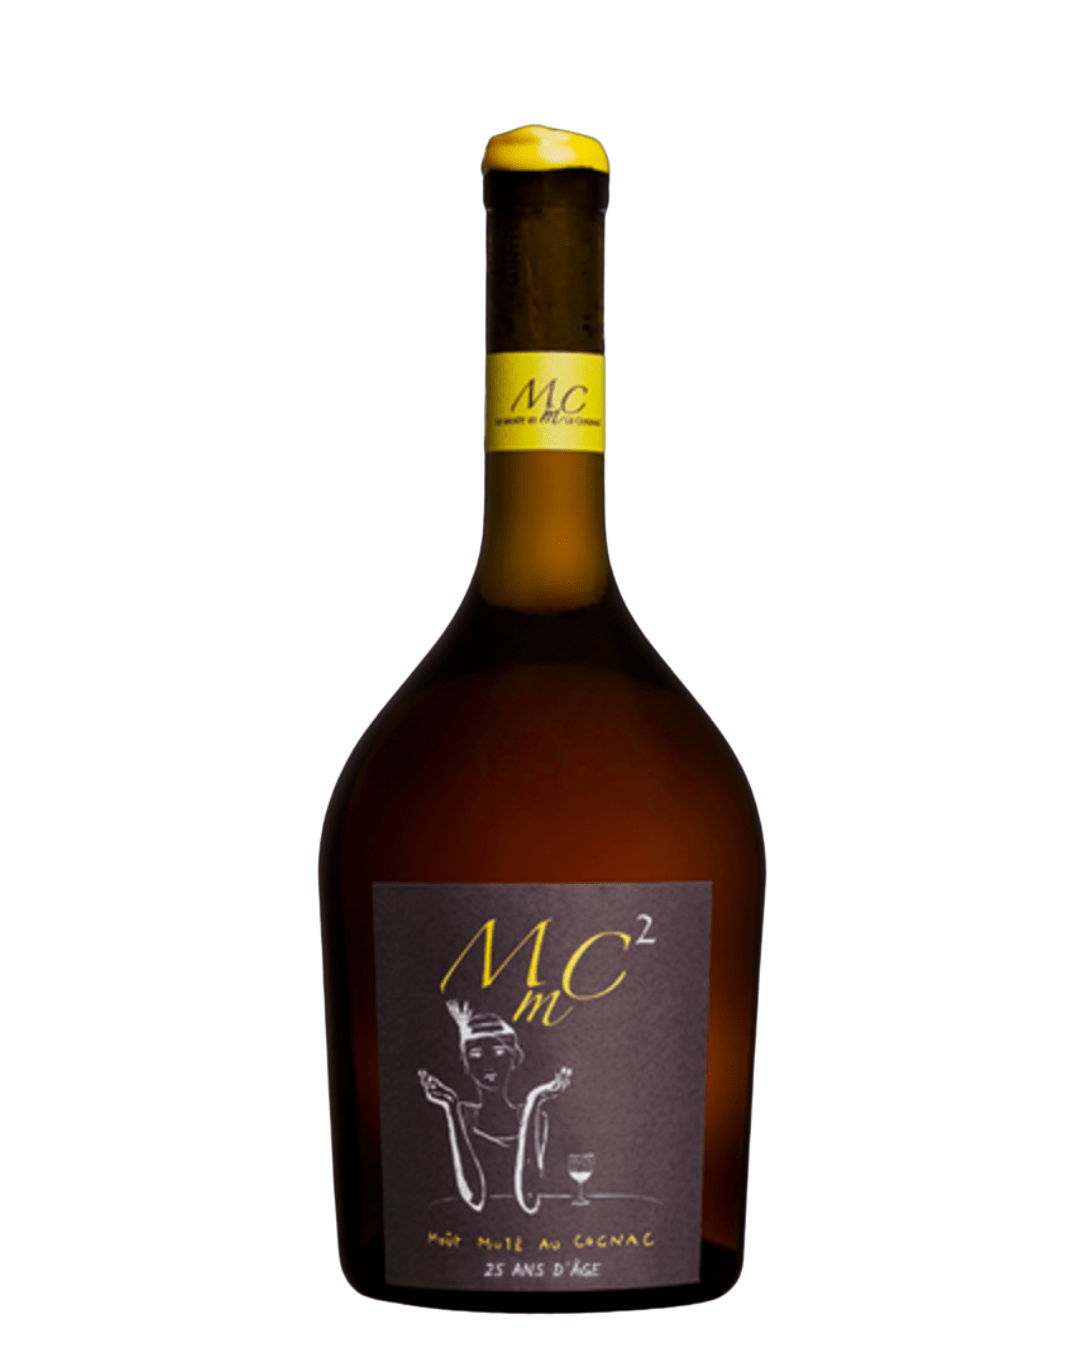 Discover Jean Grosperrin Jean Grosperrin MMC Cuvée 2 Cognac online at PENTICTON